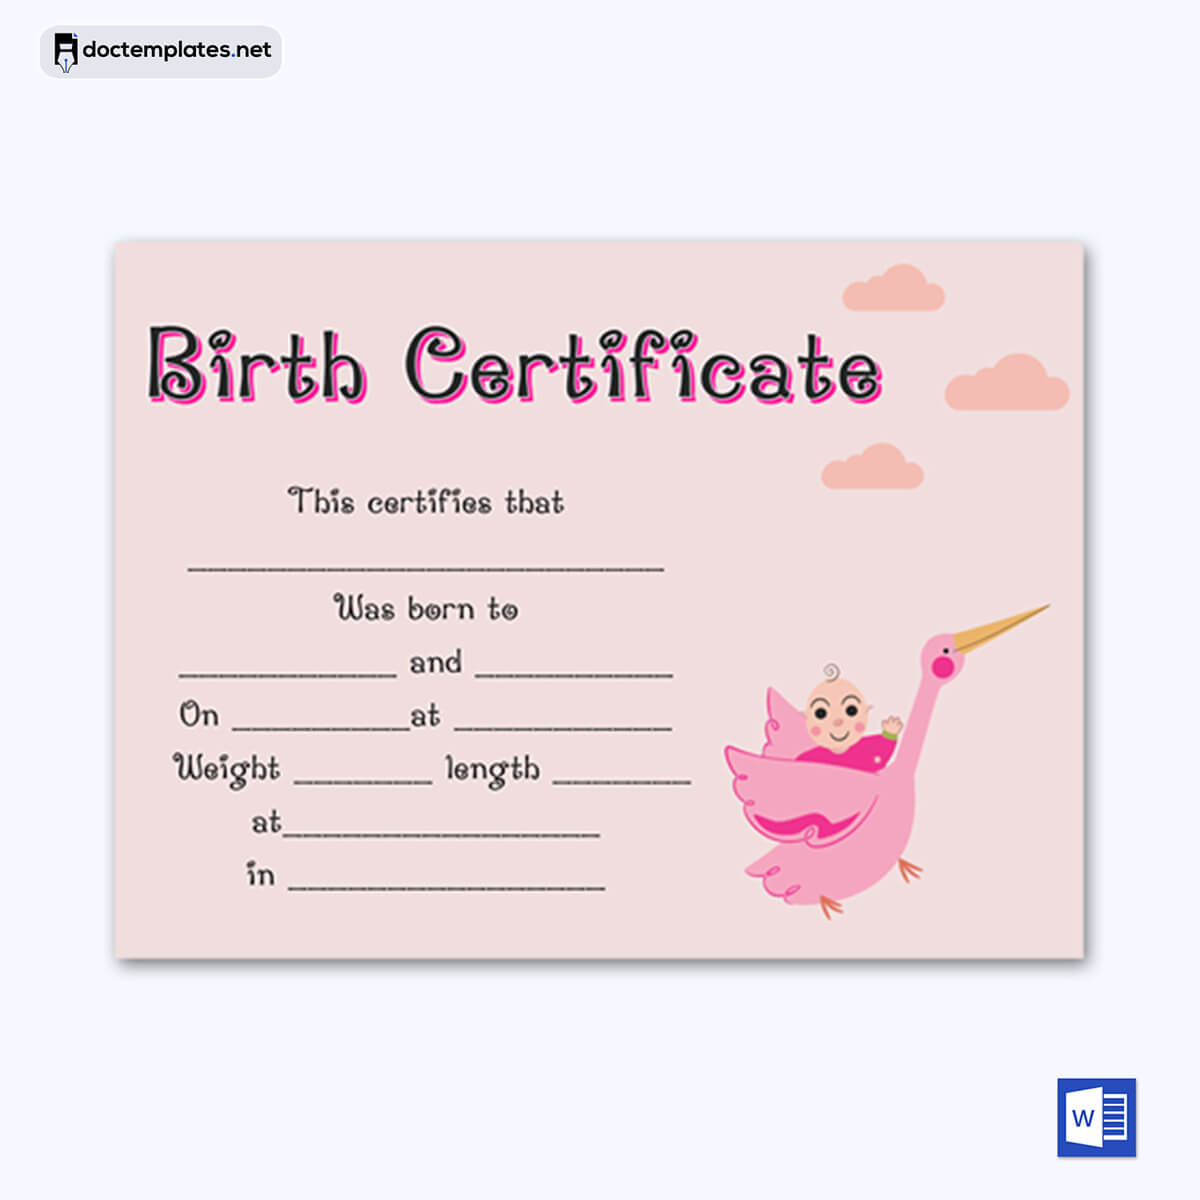 Image of Blank birth certificate PDF
Blank birth certificate PDF
07